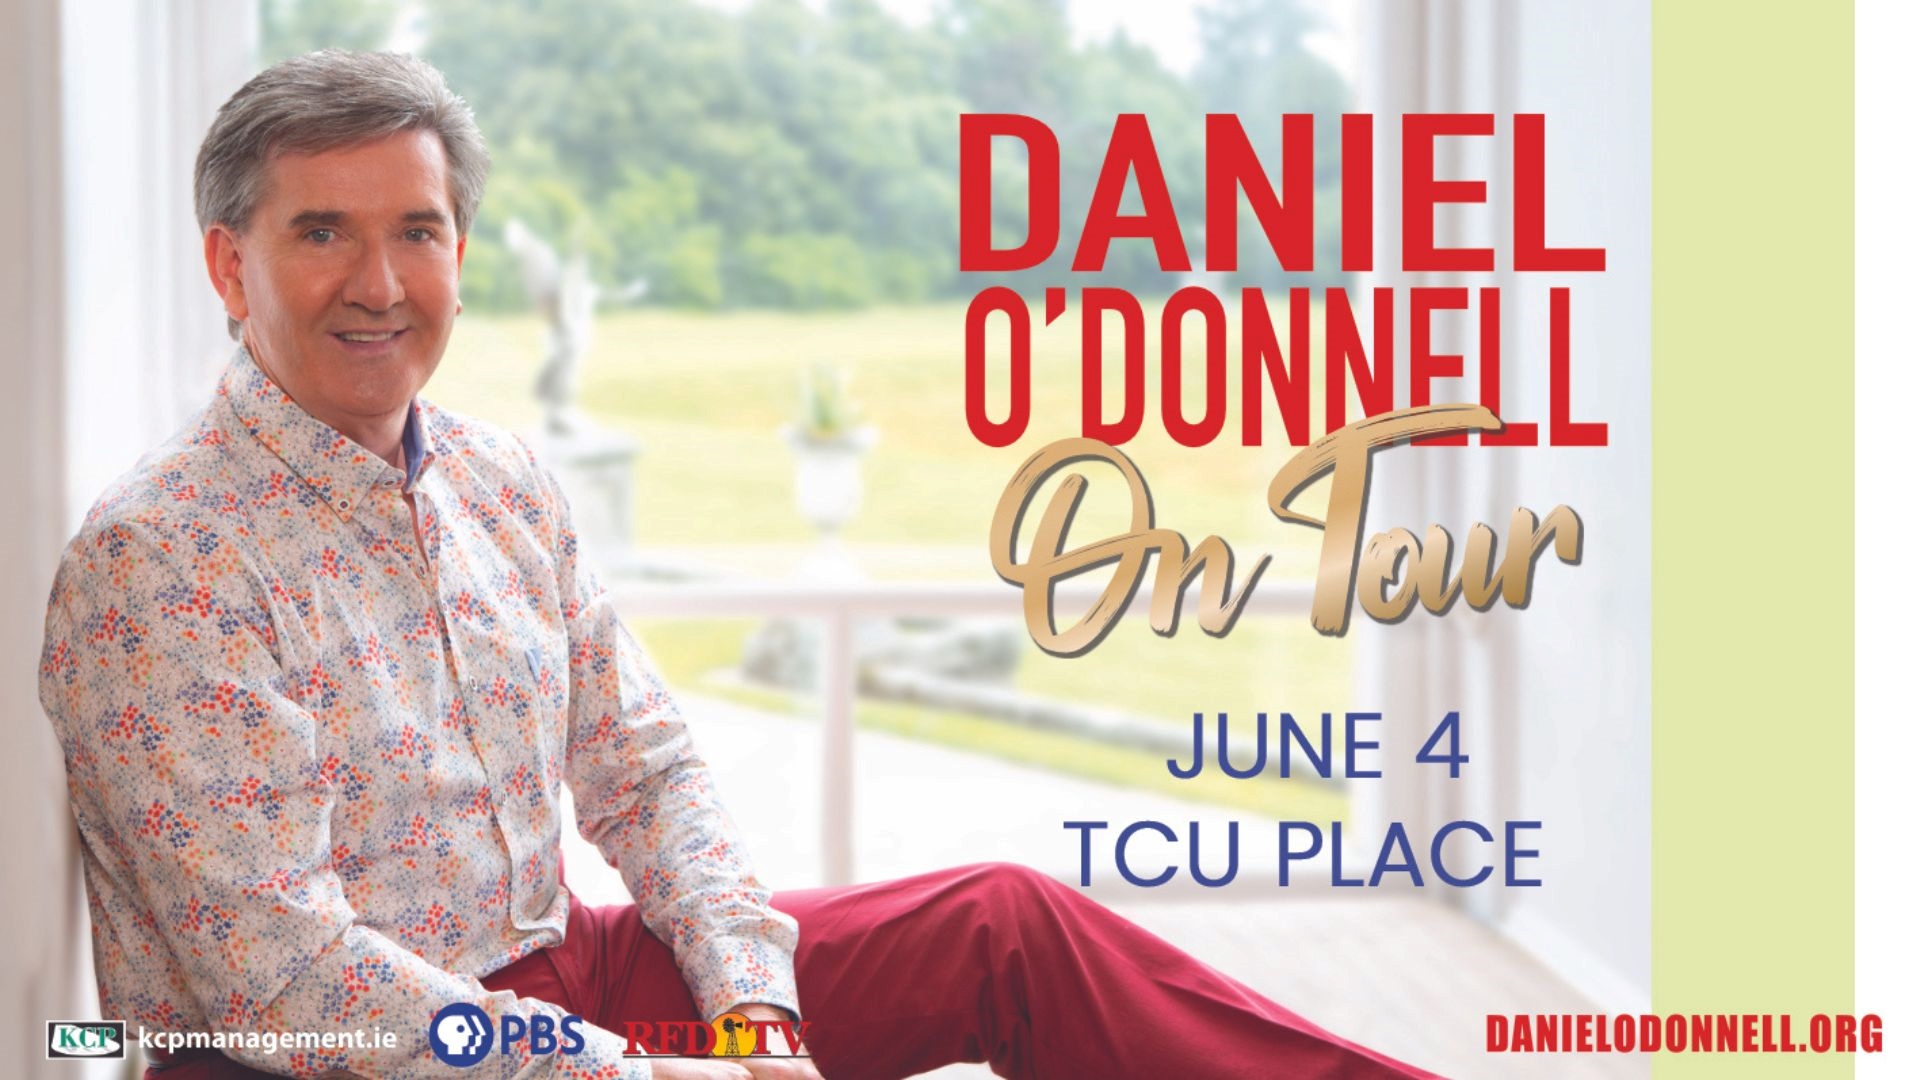 Daniel O'Donnell Live in Concert June 24